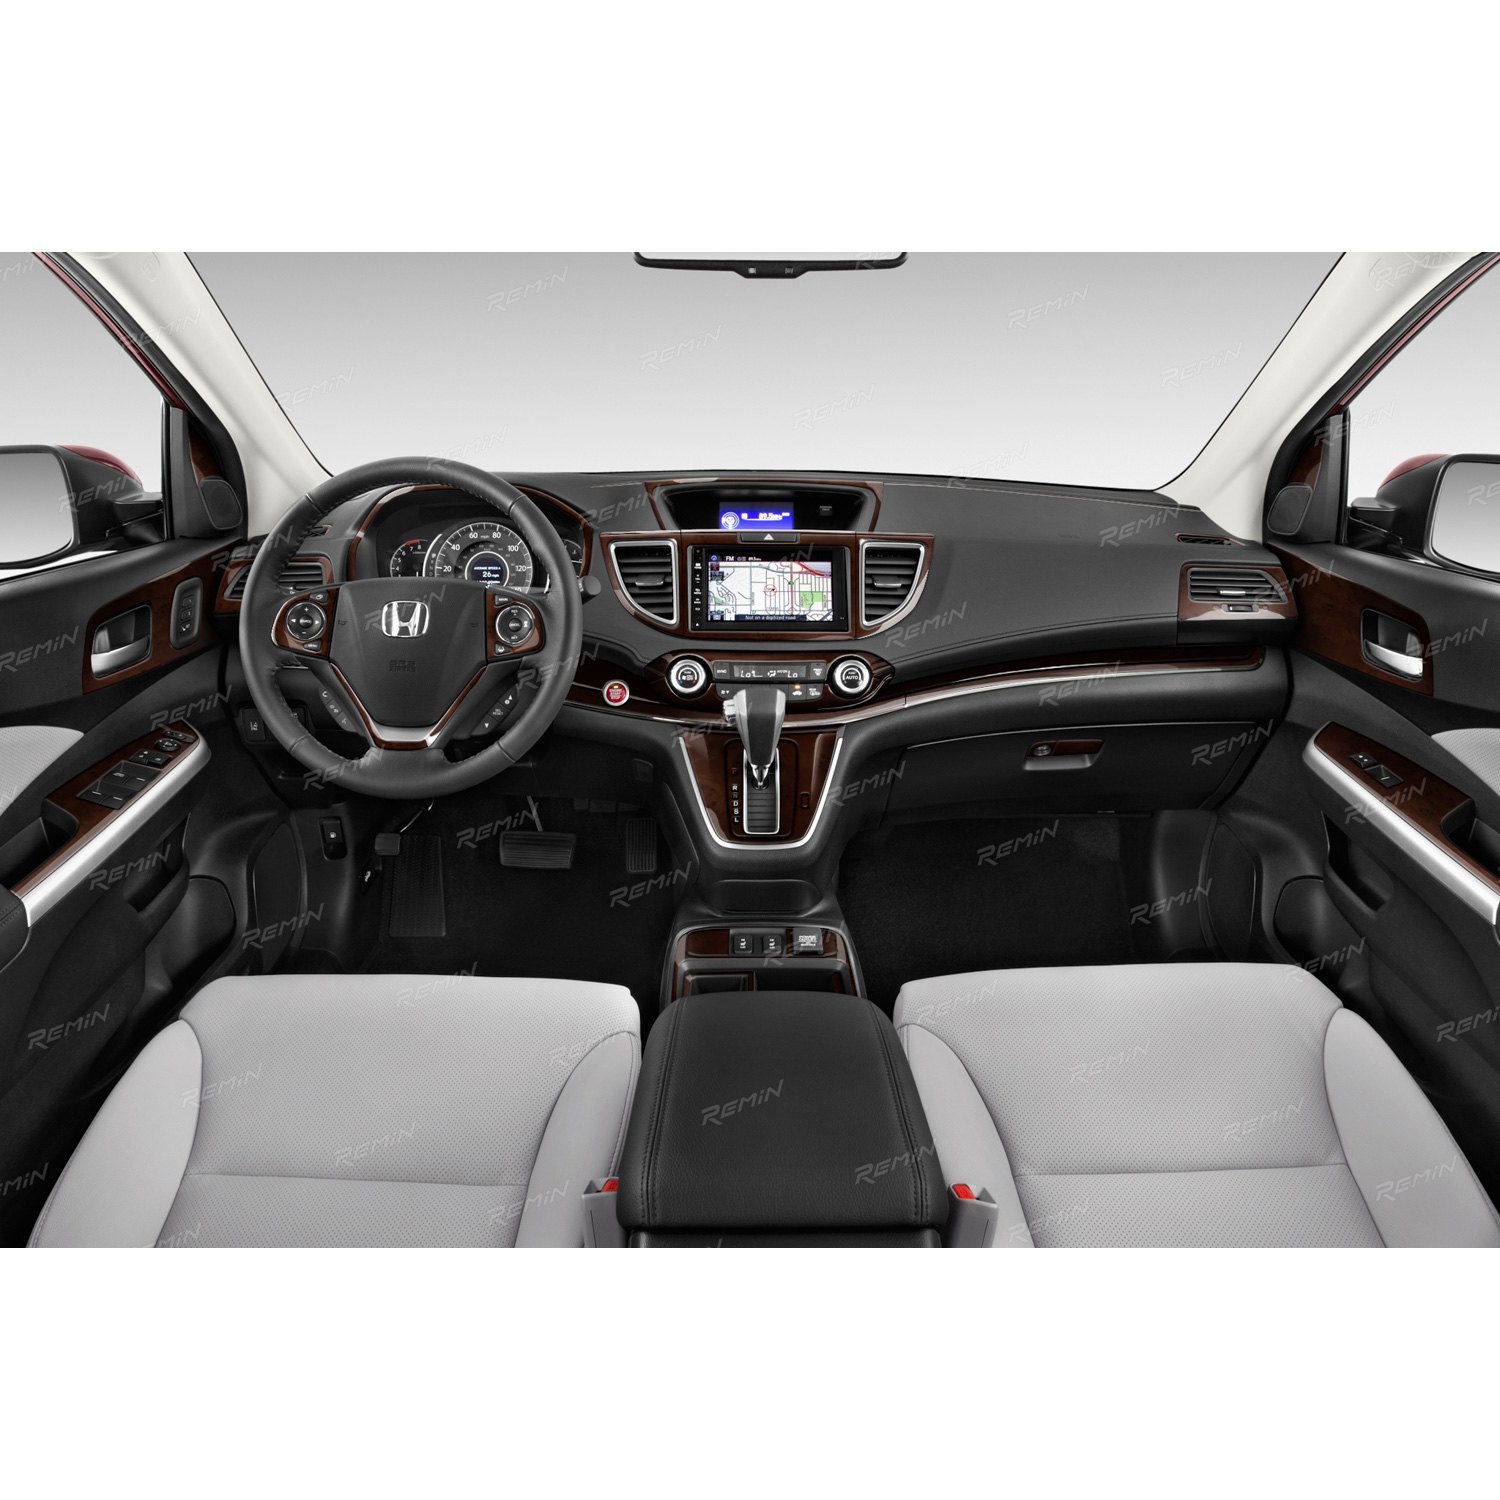 Хонда urv. Honda CR-V 2016 салон. Honda CRV 2015 Interior. Honda CR-V 2014 салон. Honda CR V 2016 Interior.